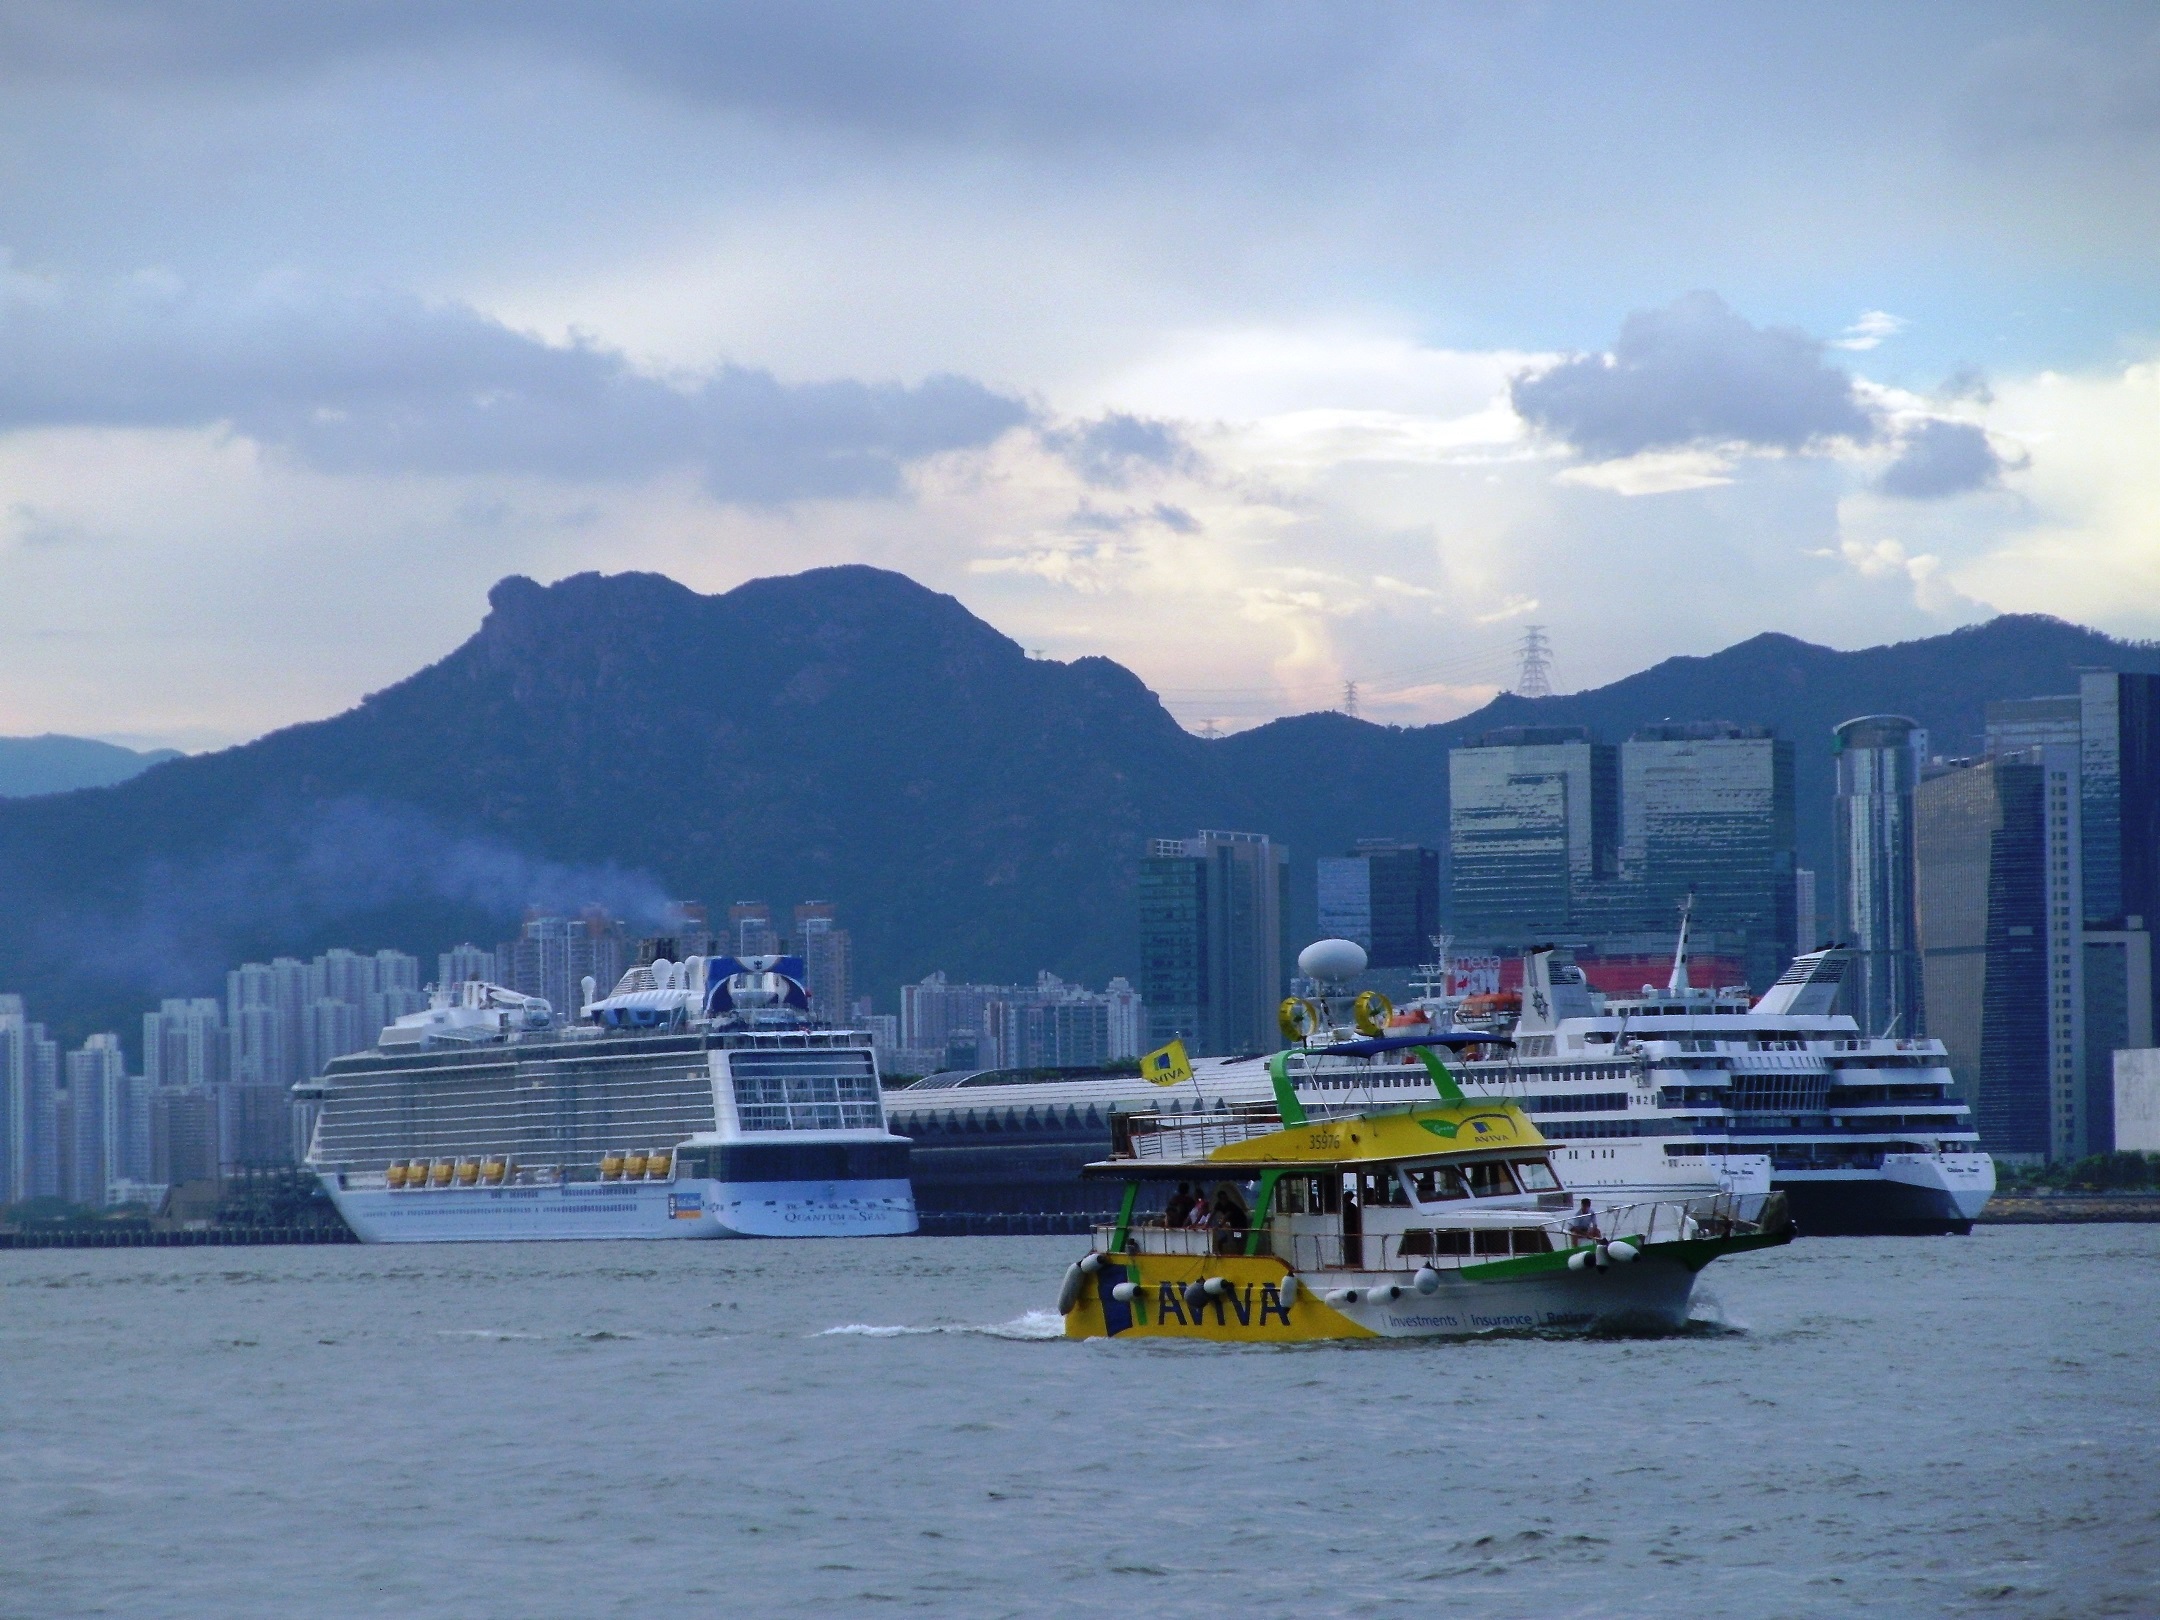 Royal Caribbean Quantum of the Seas was in Hong Kong in 2015